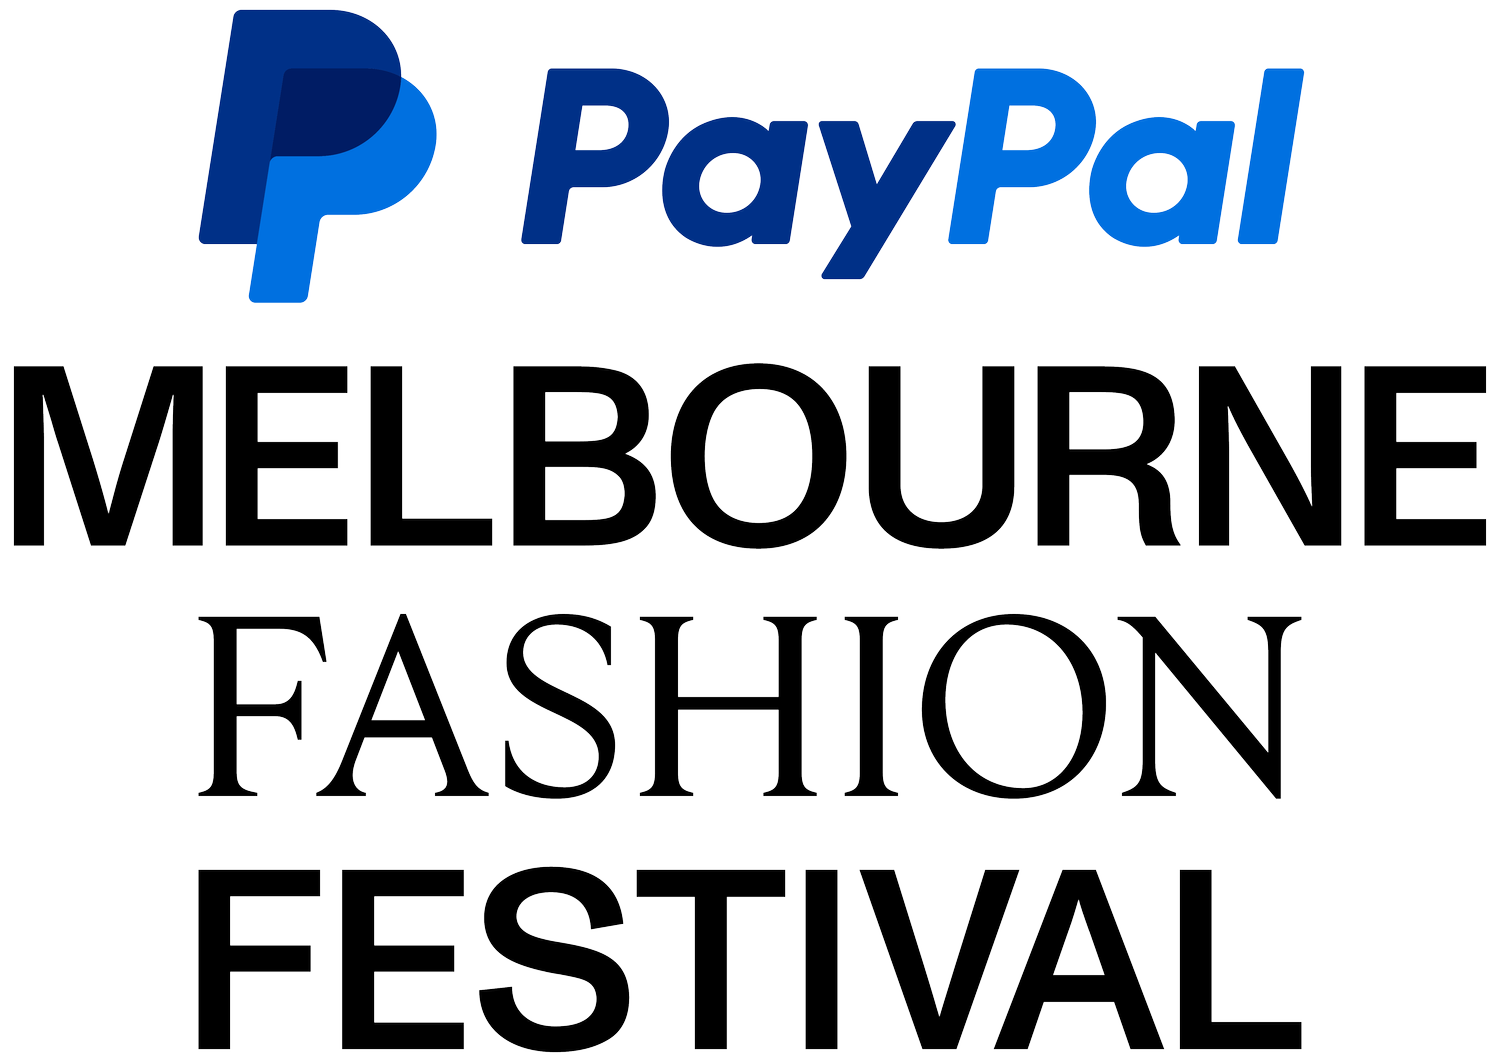 Paypal Melbourne Fashion Festival